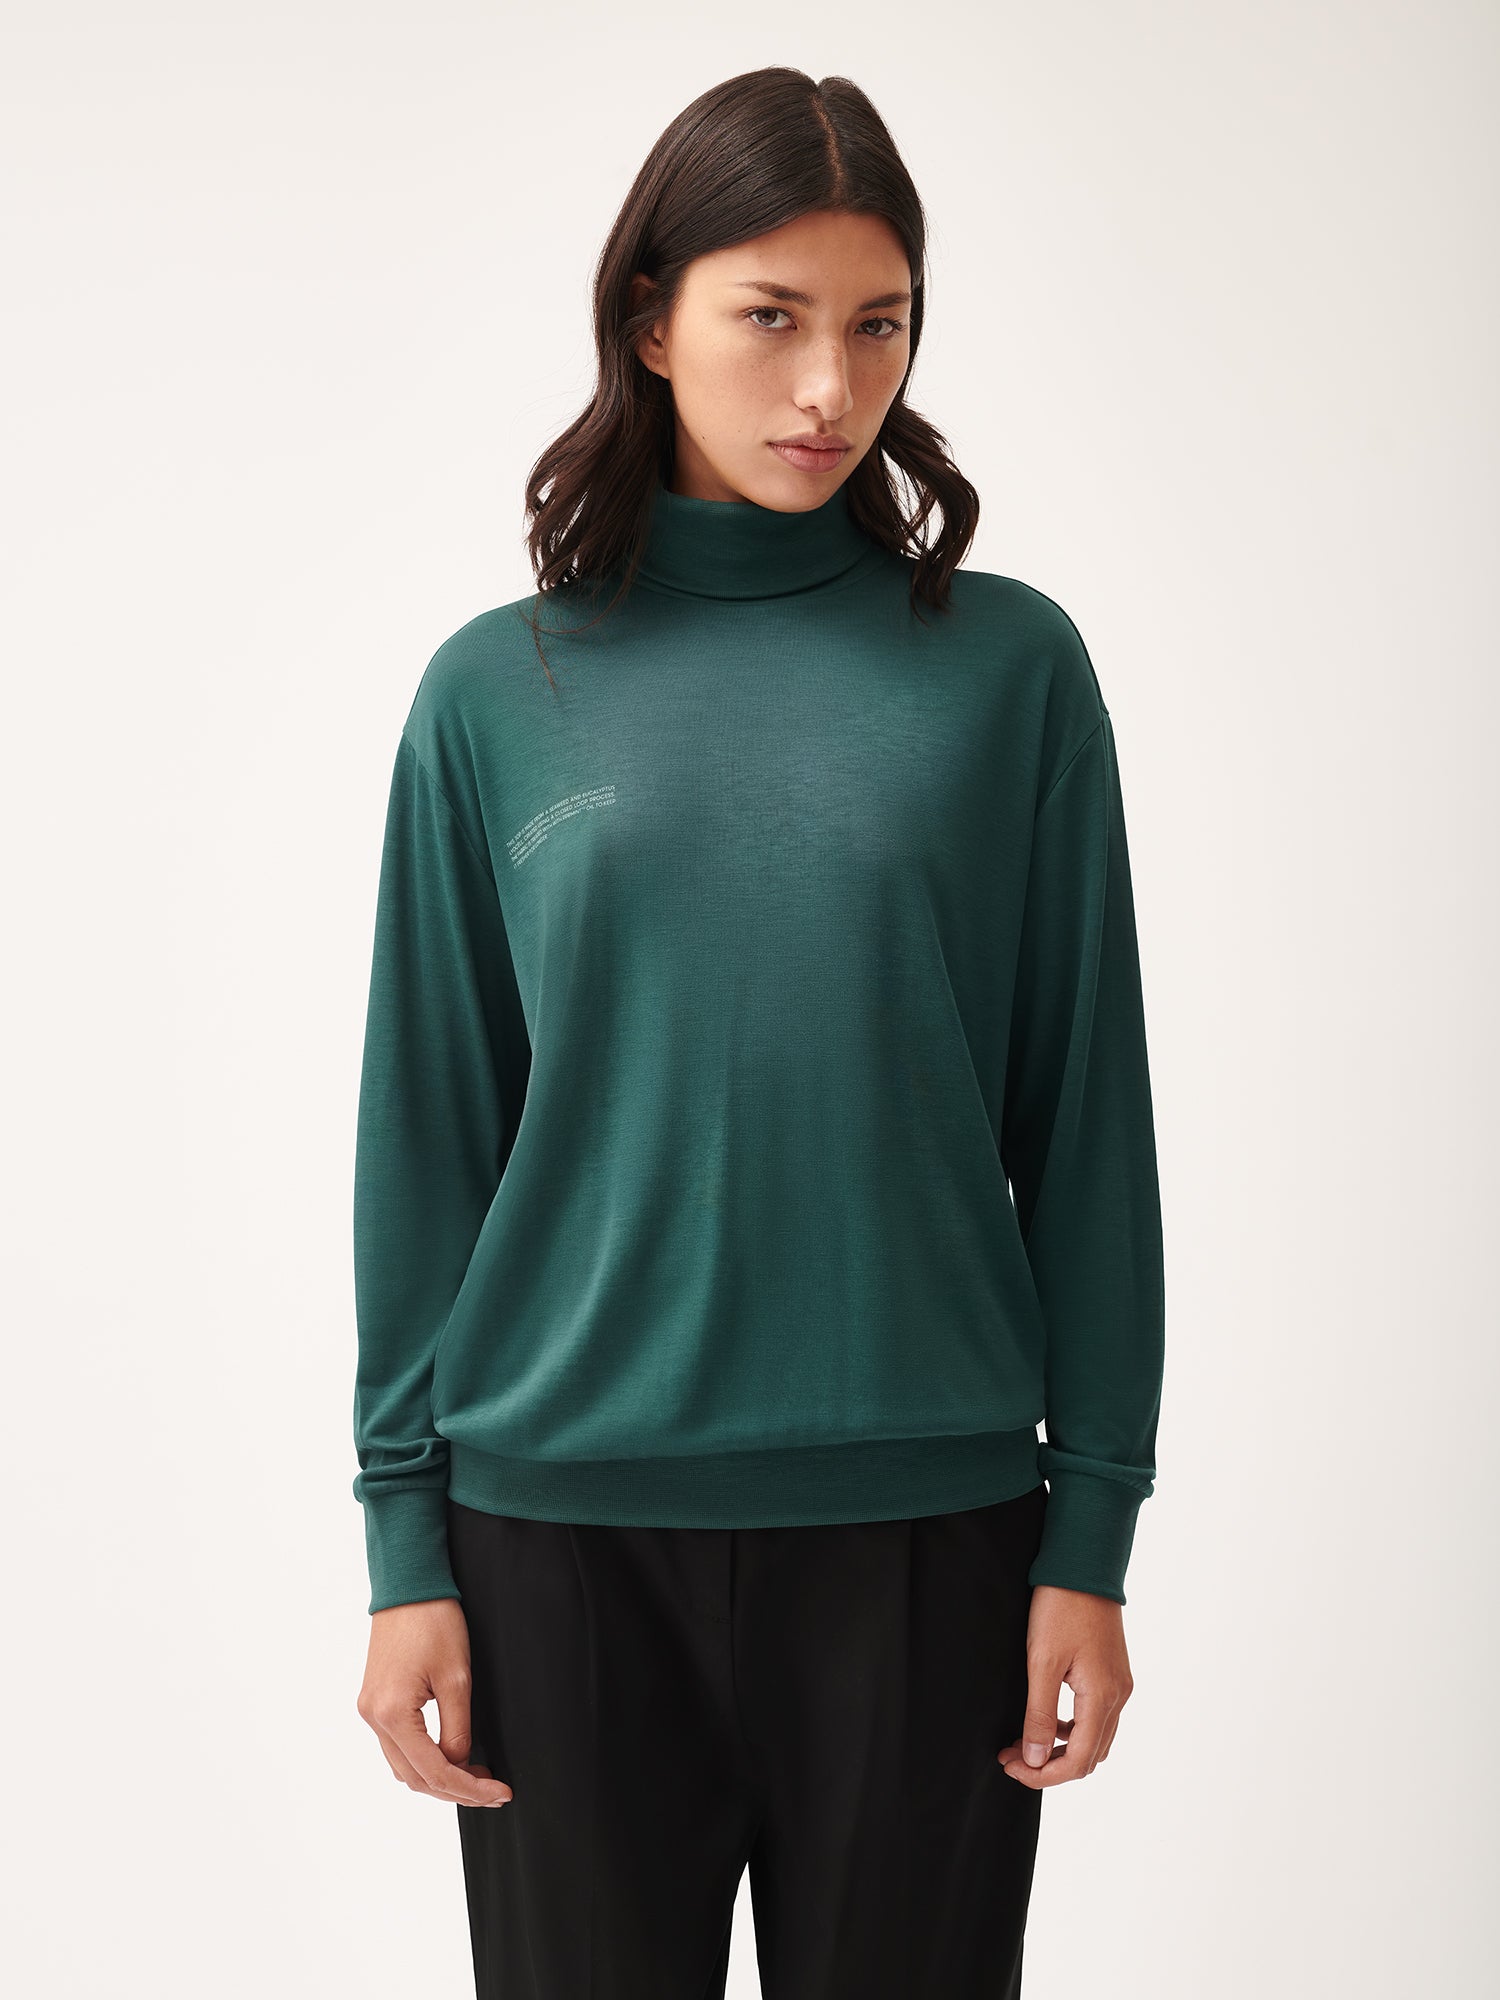 Womens_C-Fiber_Pure_Turtle_Neck_T-Shirt_Foliage_Green-1 femaile